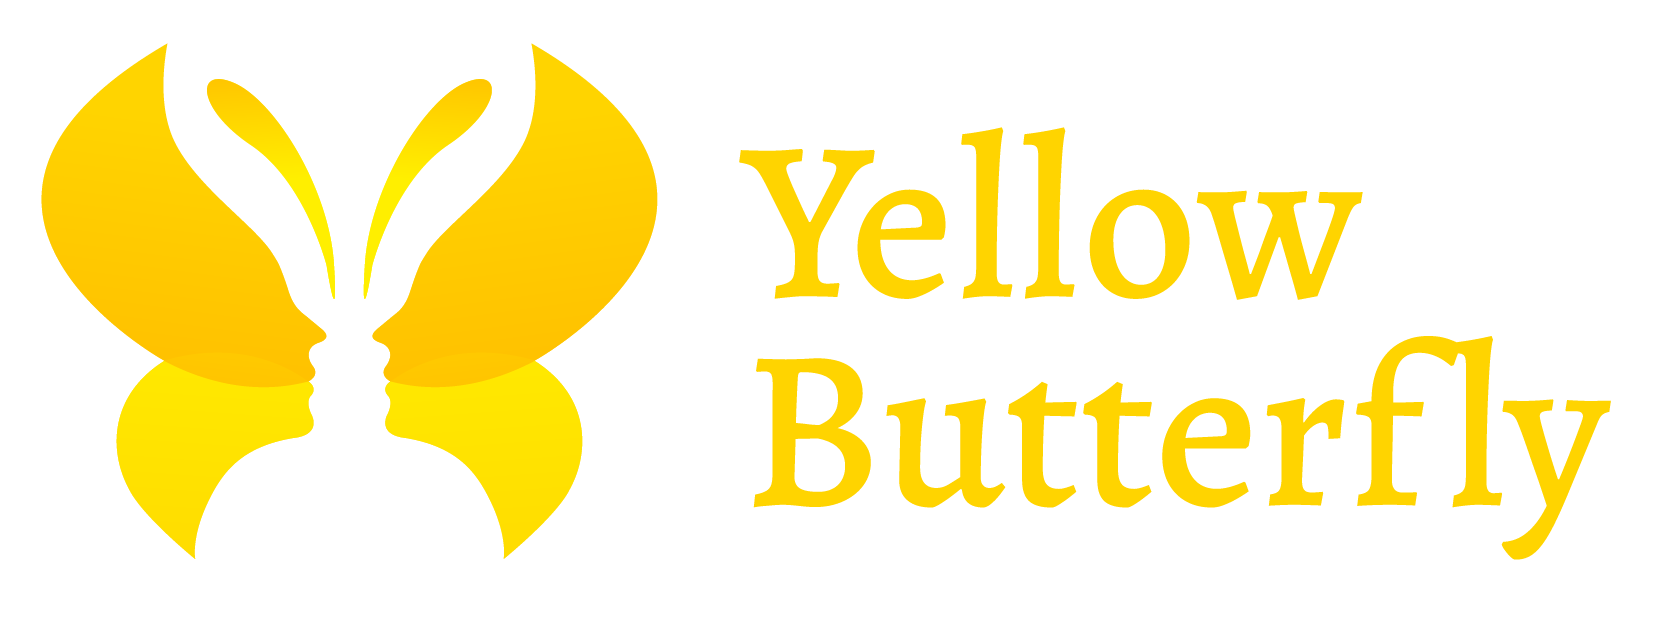 Yellow Butterfly Banner Logo.